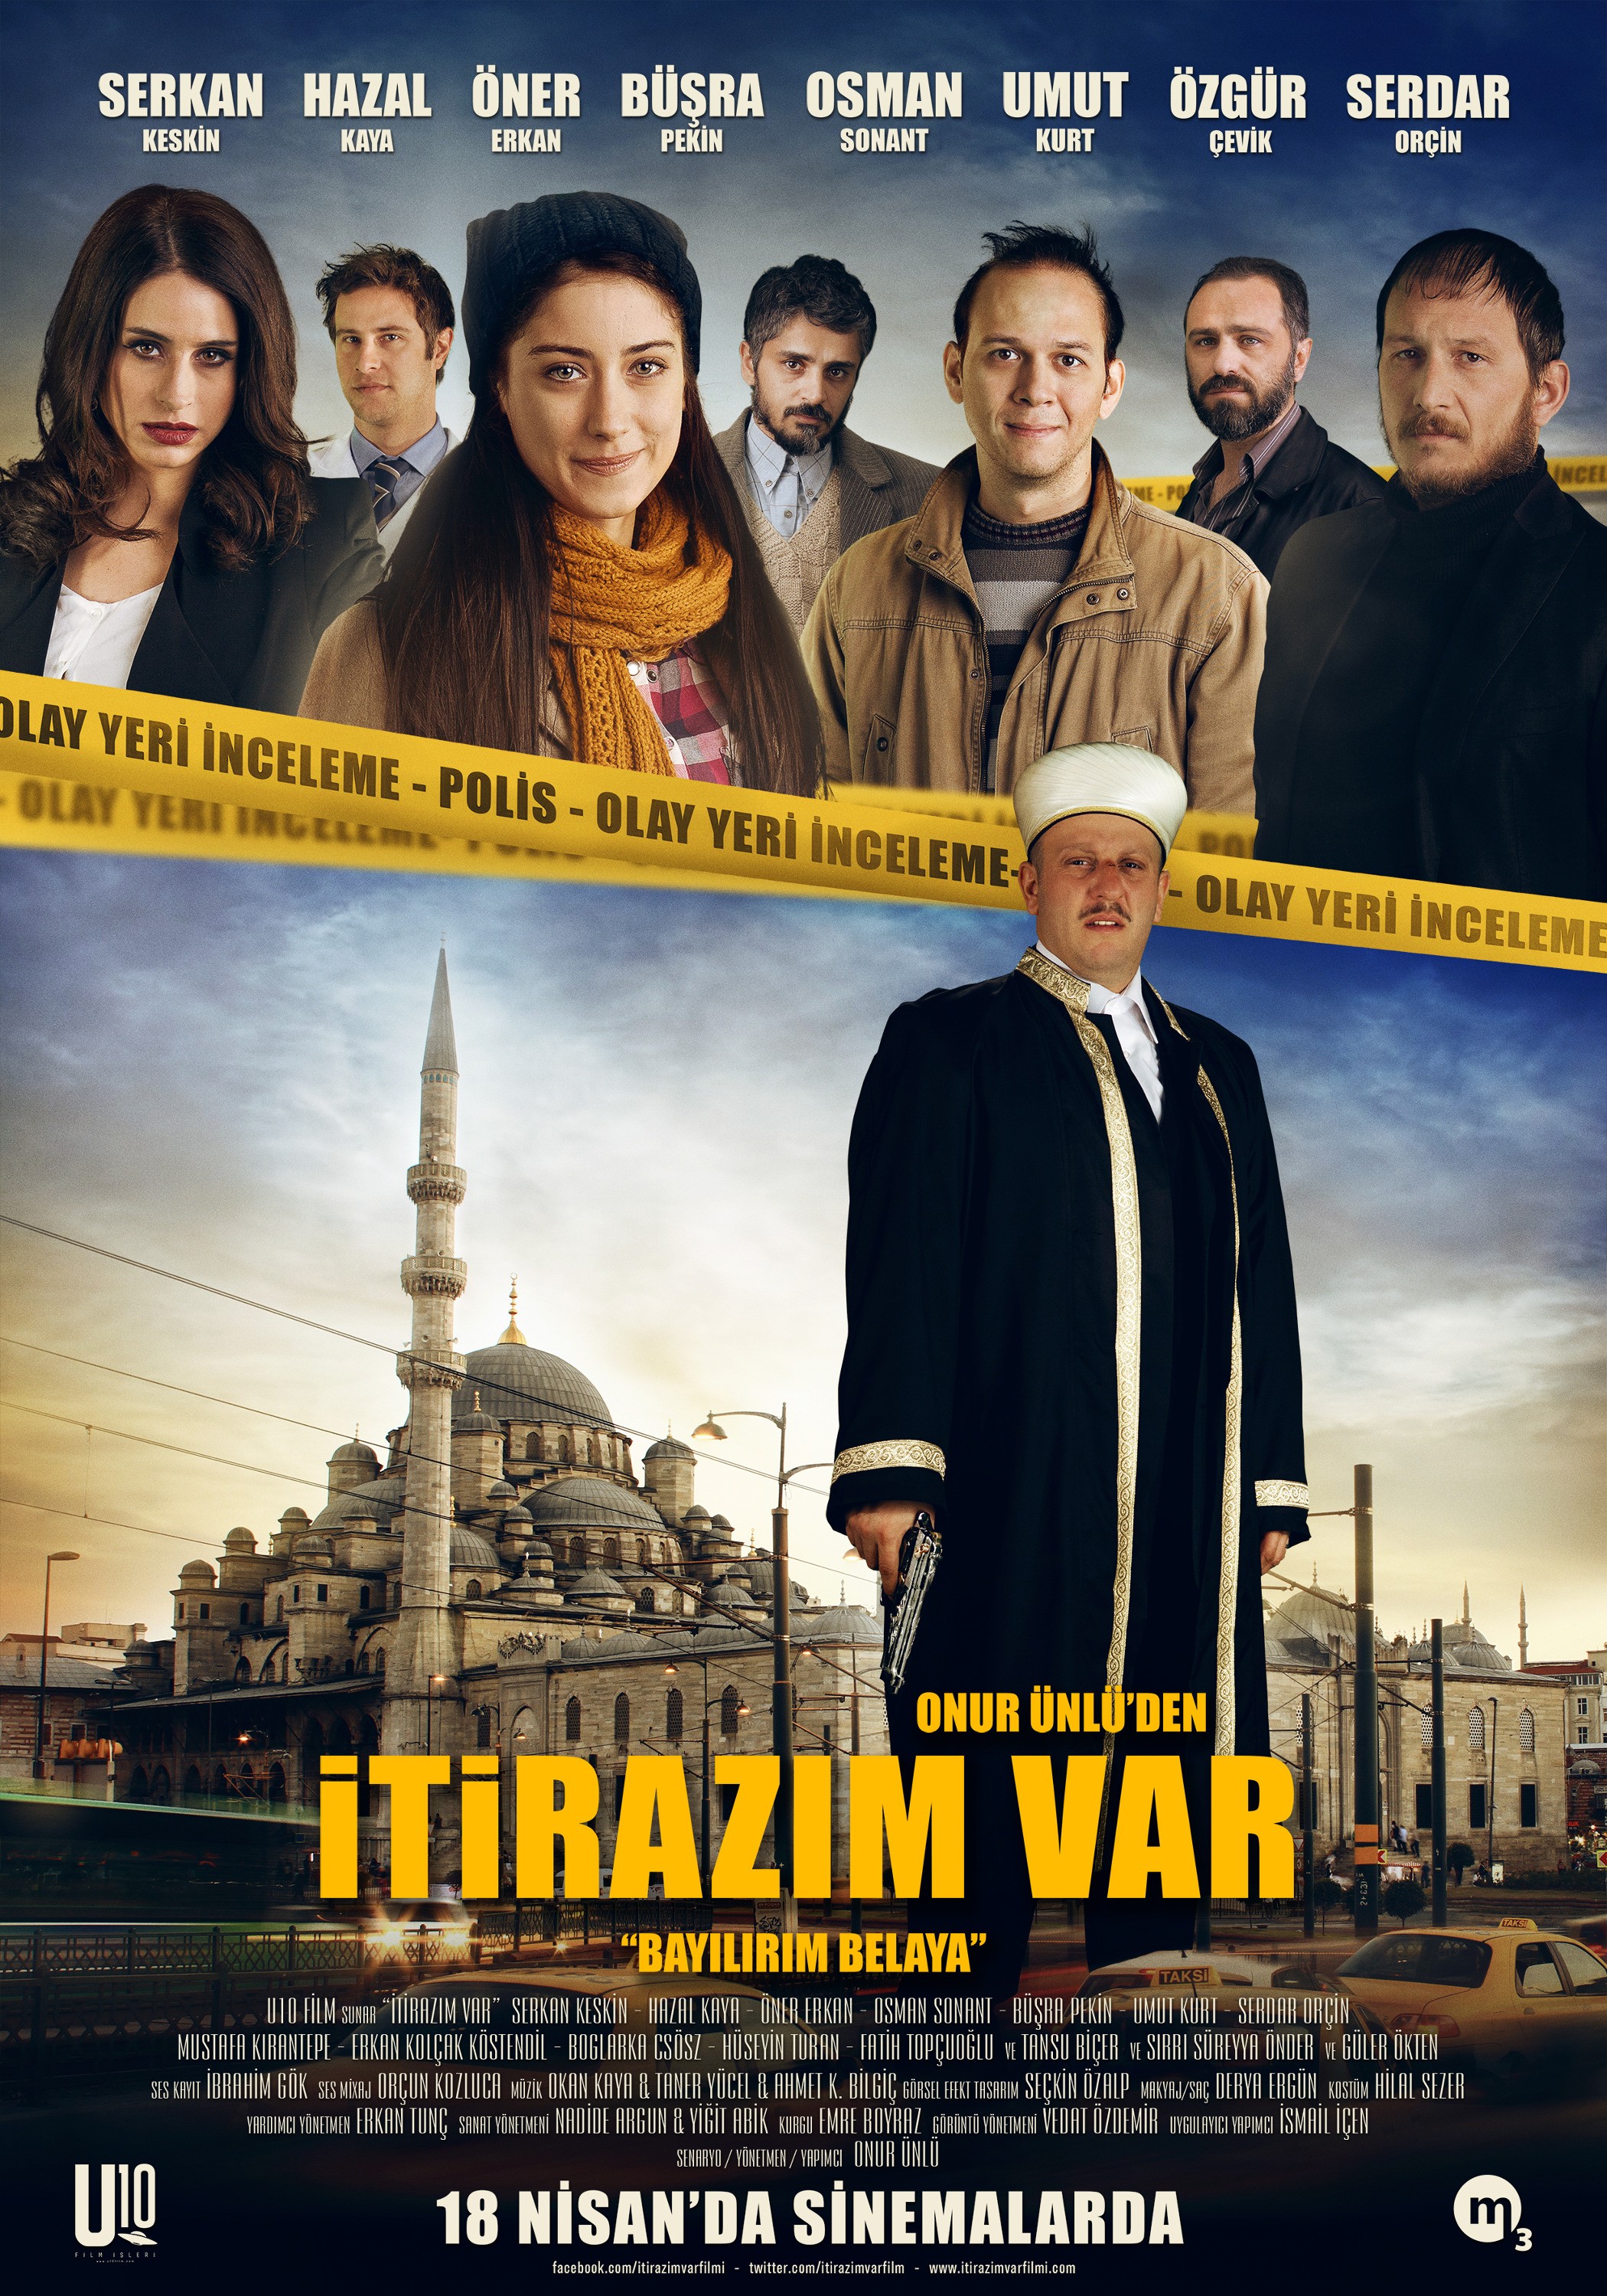 Mega Sized Movie Poster Image for Itirazim Var 